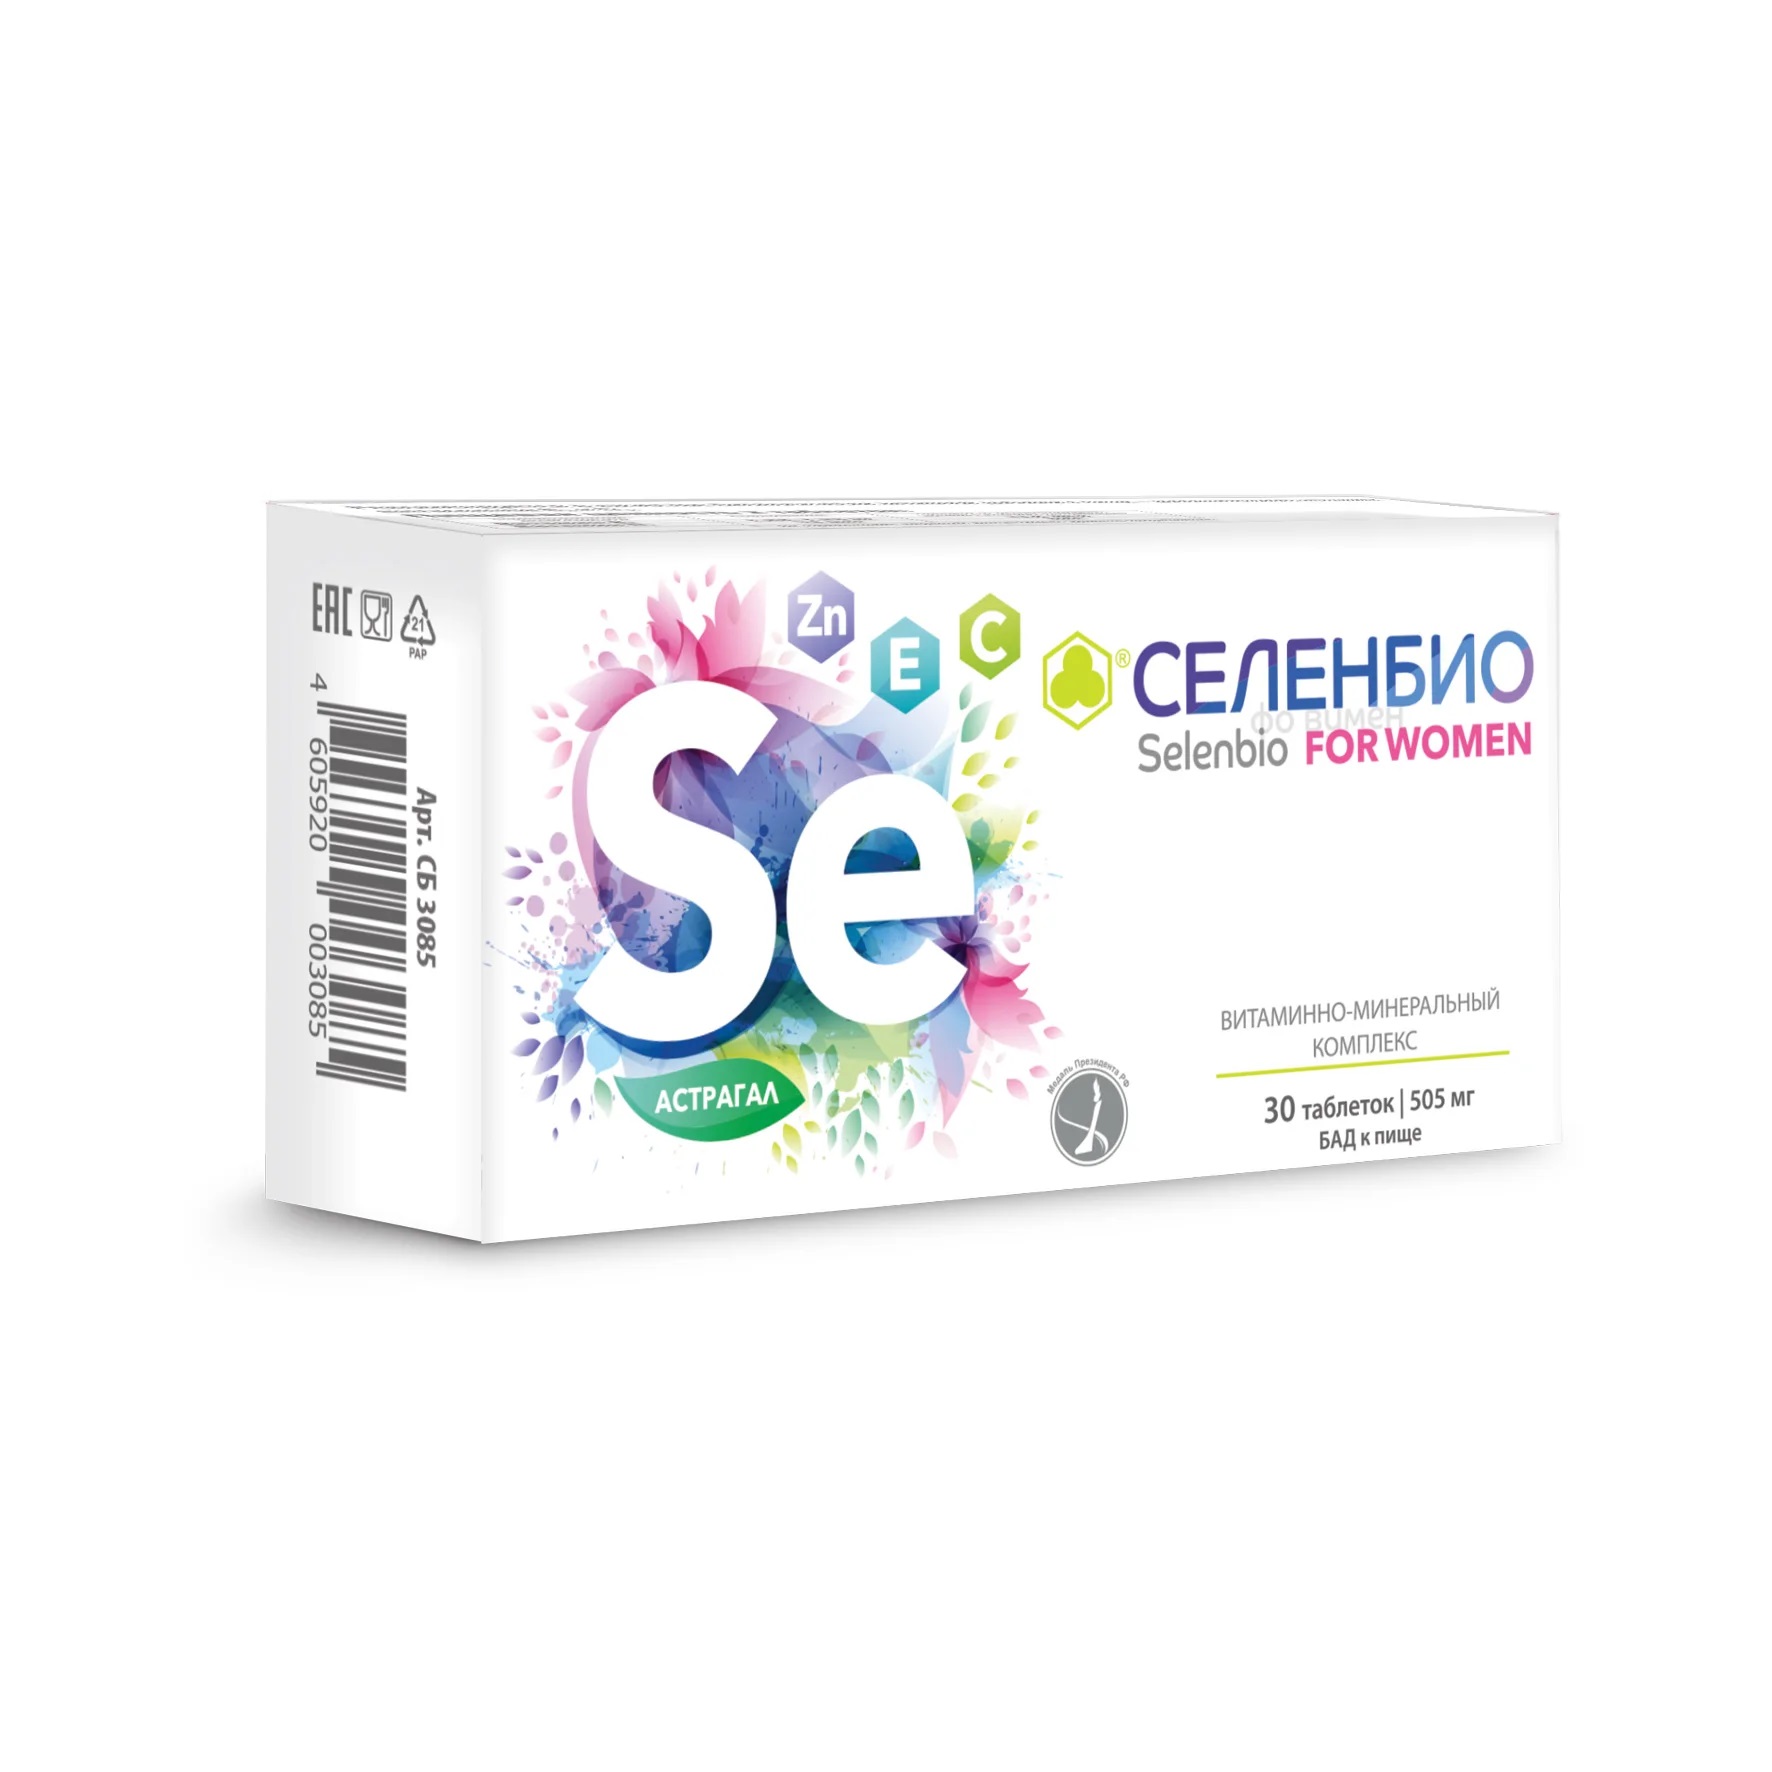 Селенбио for women, таблетки 505 мг, 30 шт. men without women